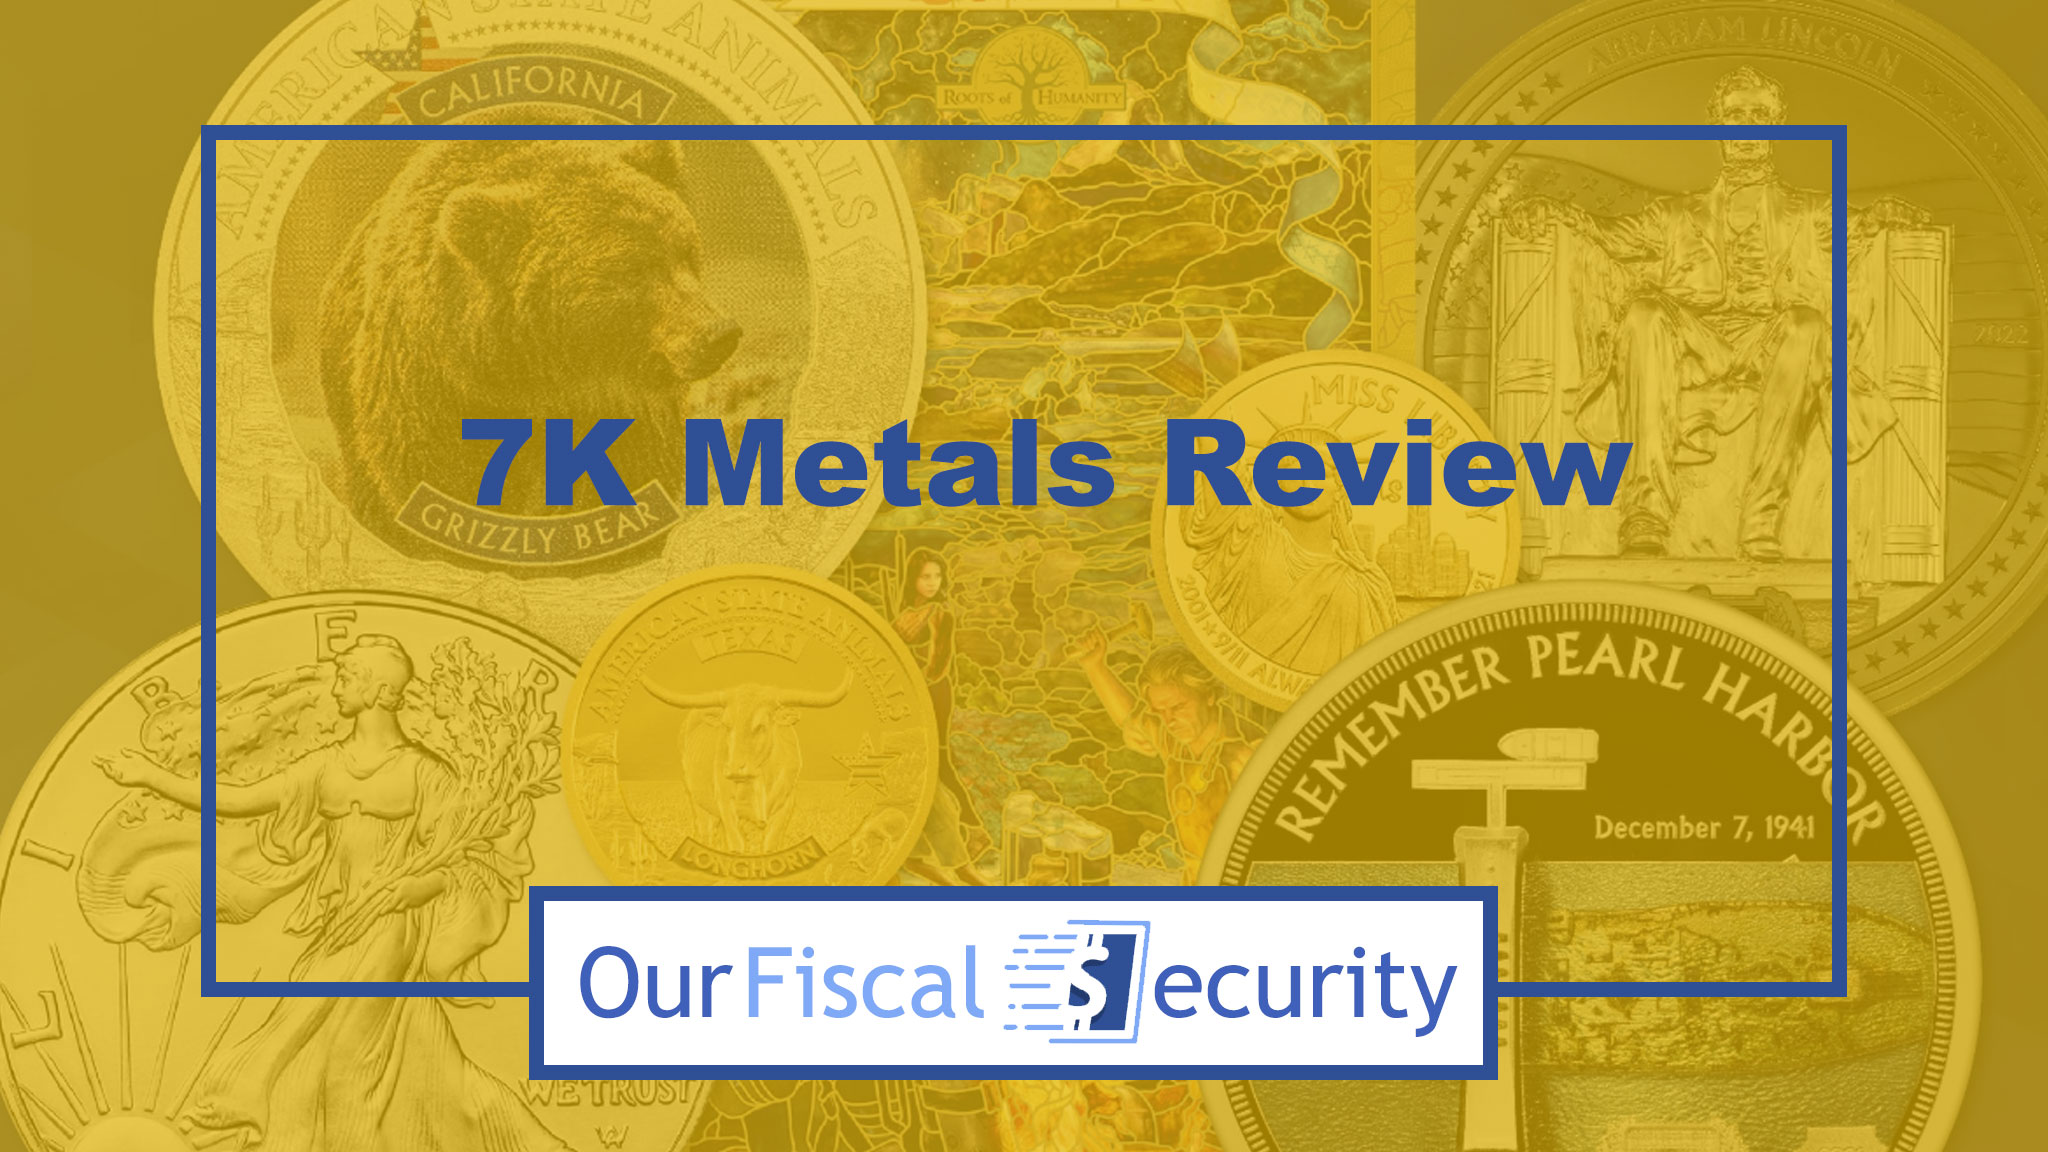 7K Metals Review